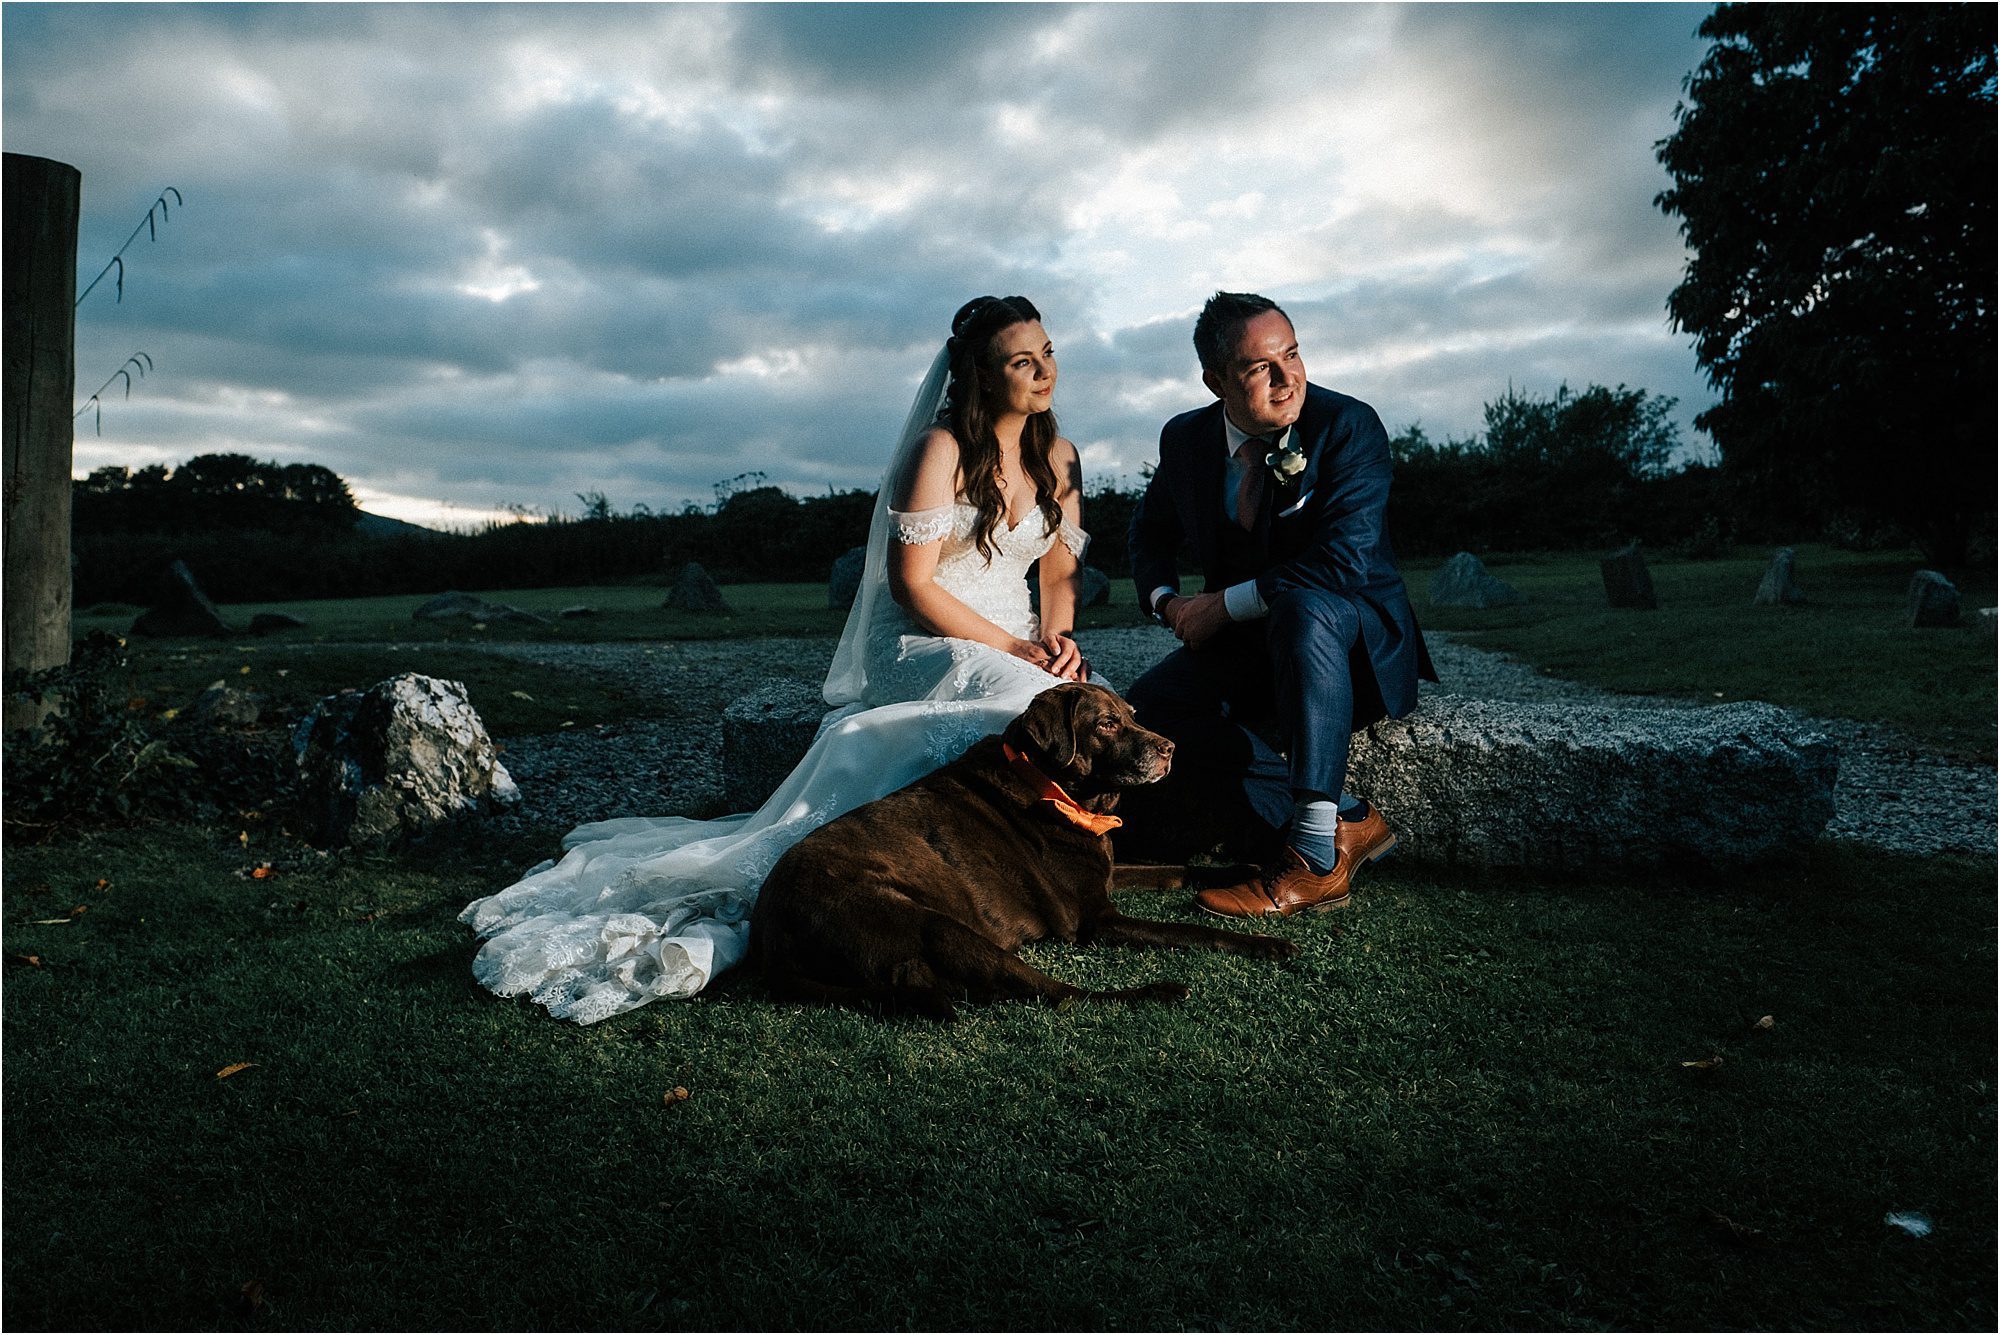 The Green Cornwall wedding photographer